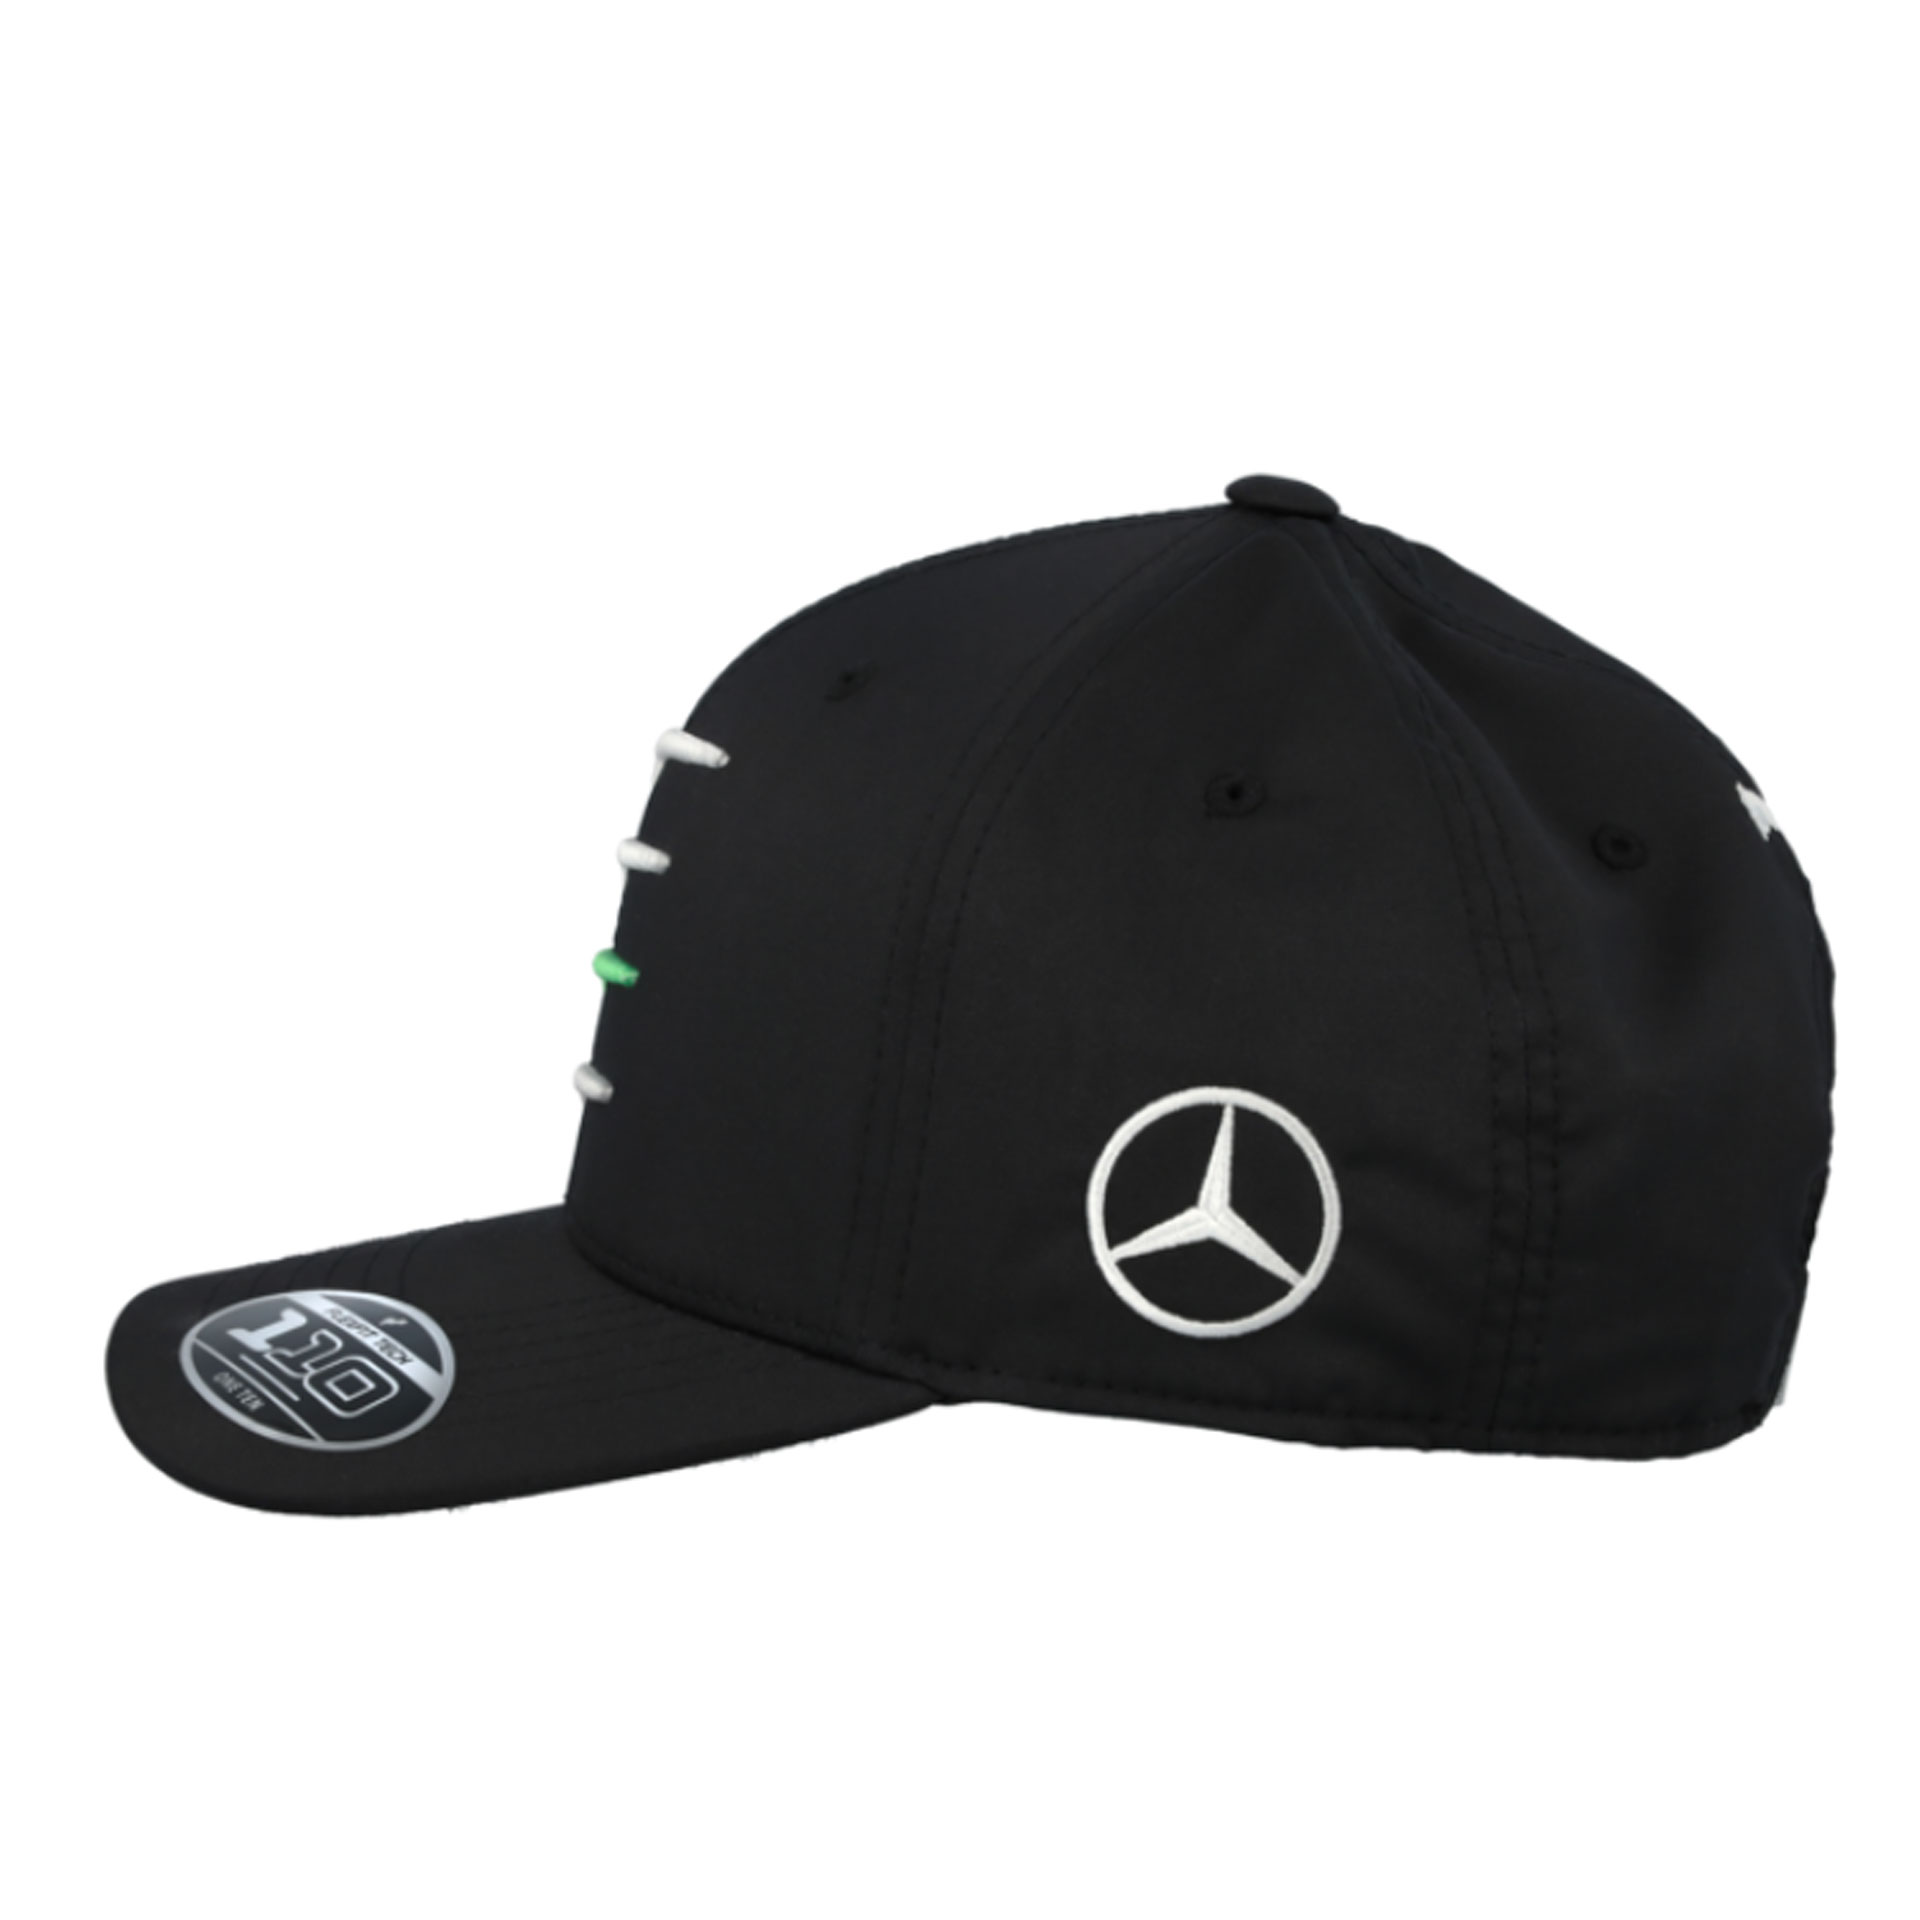 Mercedes-Benz Golf-Cap schwarz Basecap Kappe by PUMA